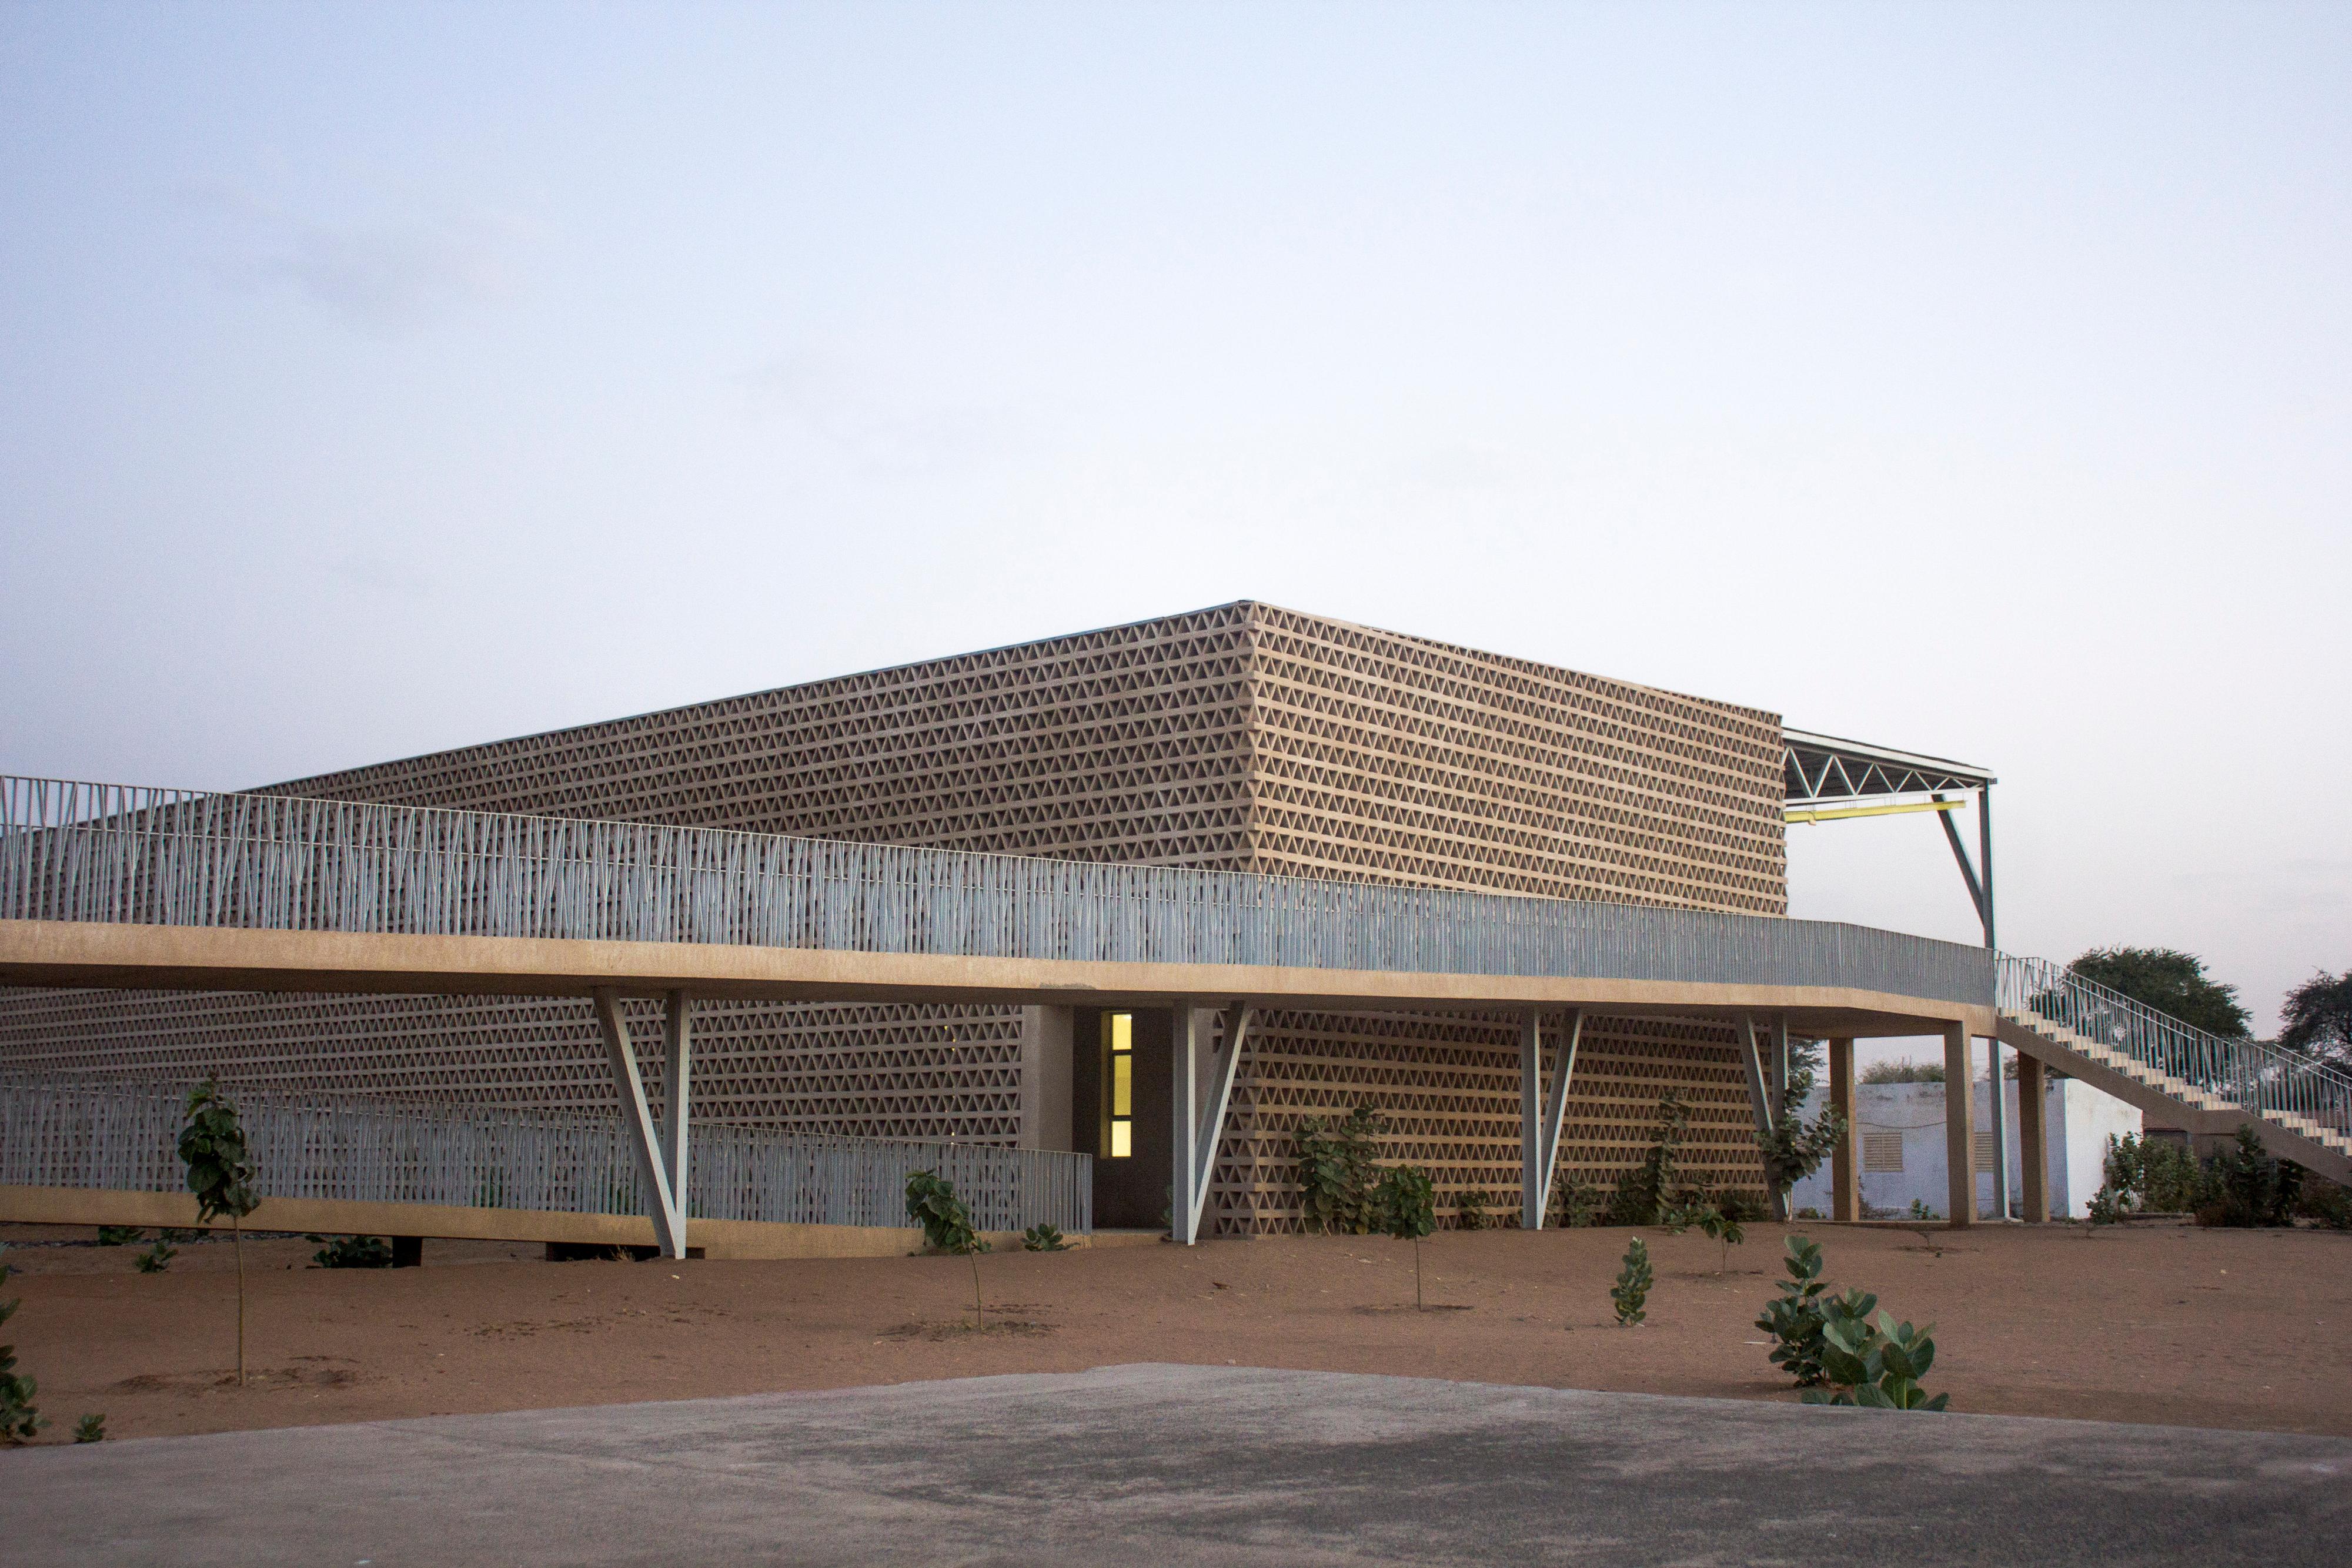 Учебный корпус Университета имени Алиуна Диопа, Сенегал. © Aga Khan Trust for Culture / Chérif Tall